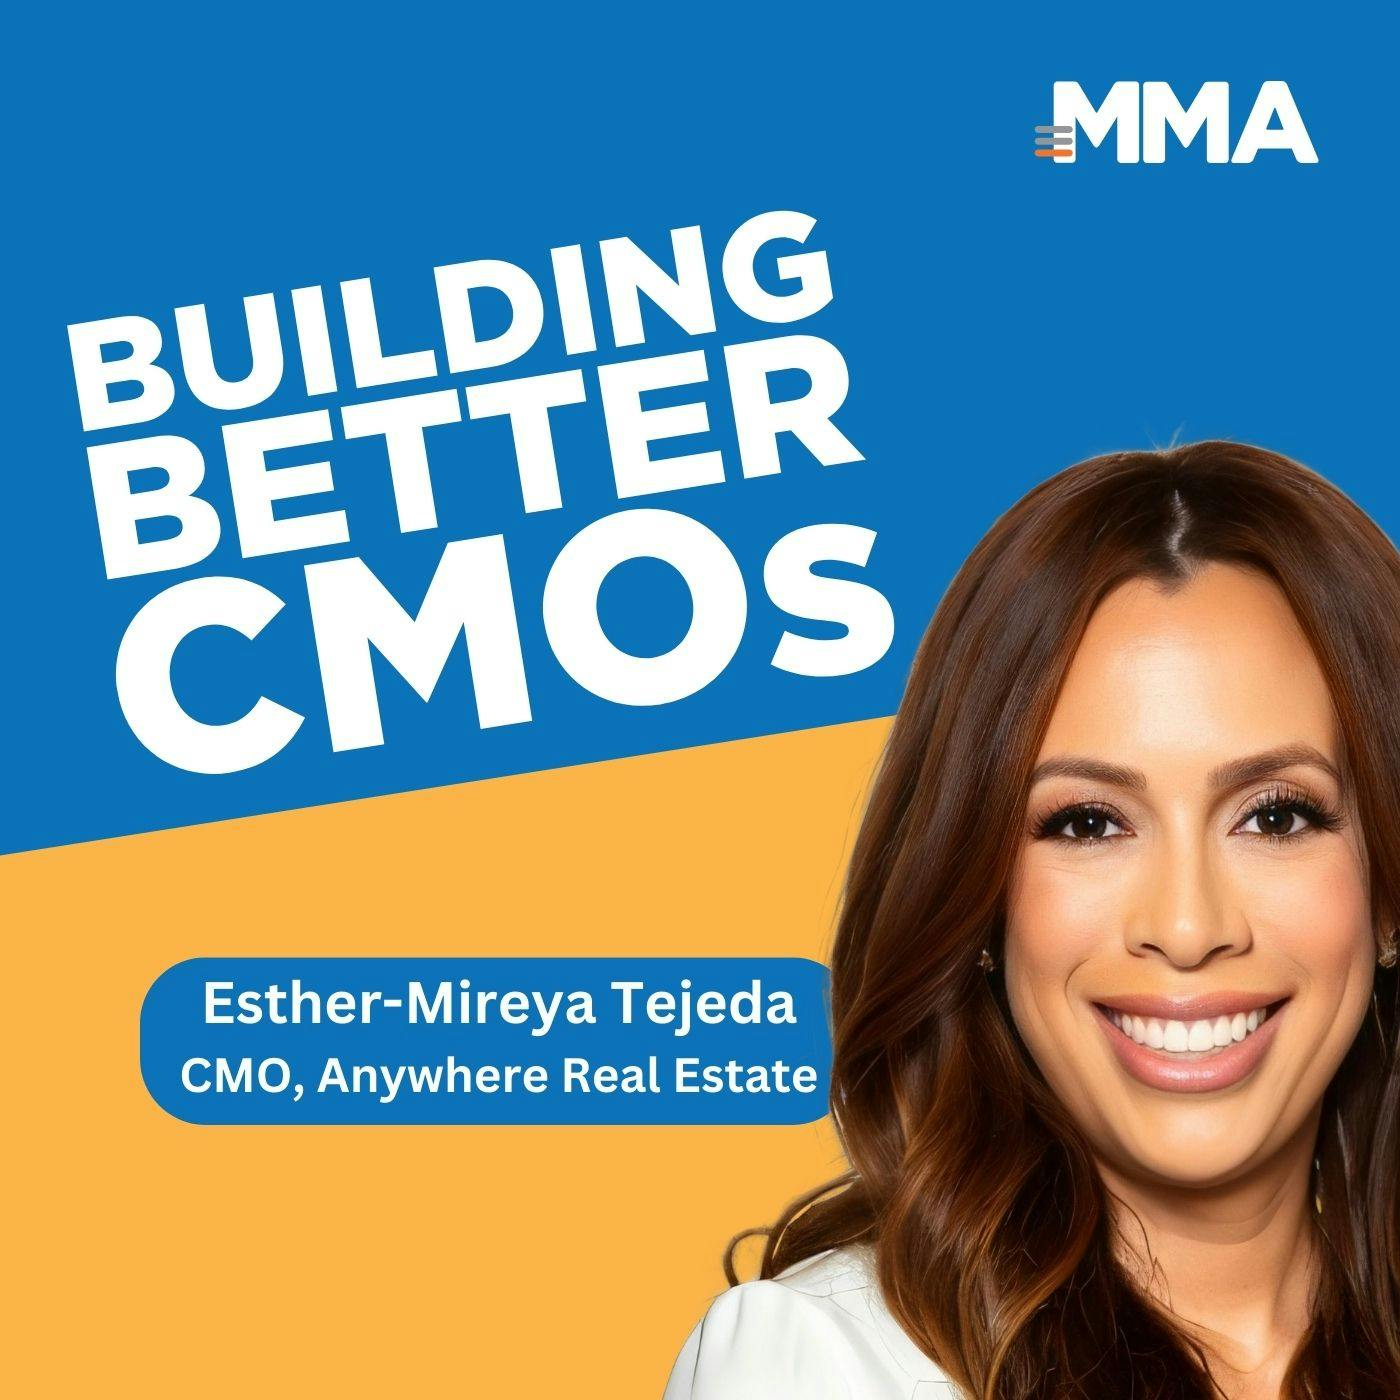 Esther-Mireya Tejeda, CMO of Anywhere Real Estate: Emographics, Not Demographics